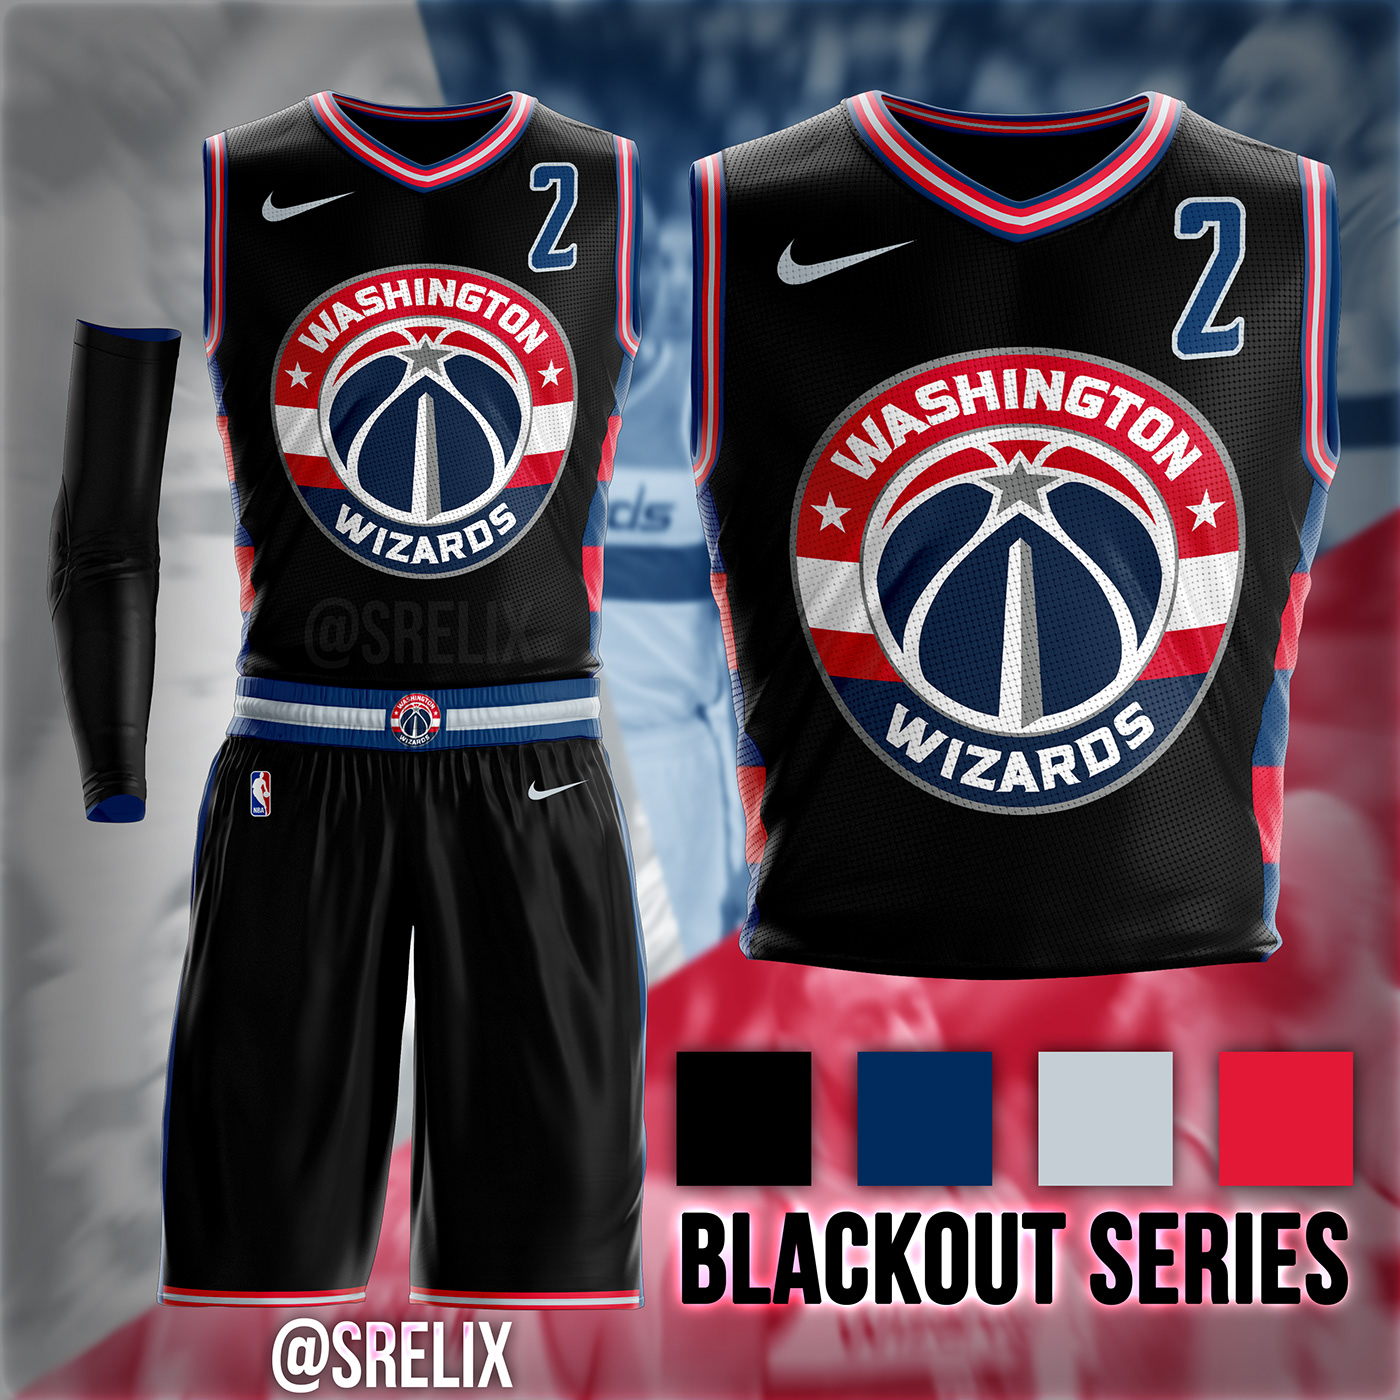 SRELIX Jerseys on X: Washington Wizards jersey concept. Follow me